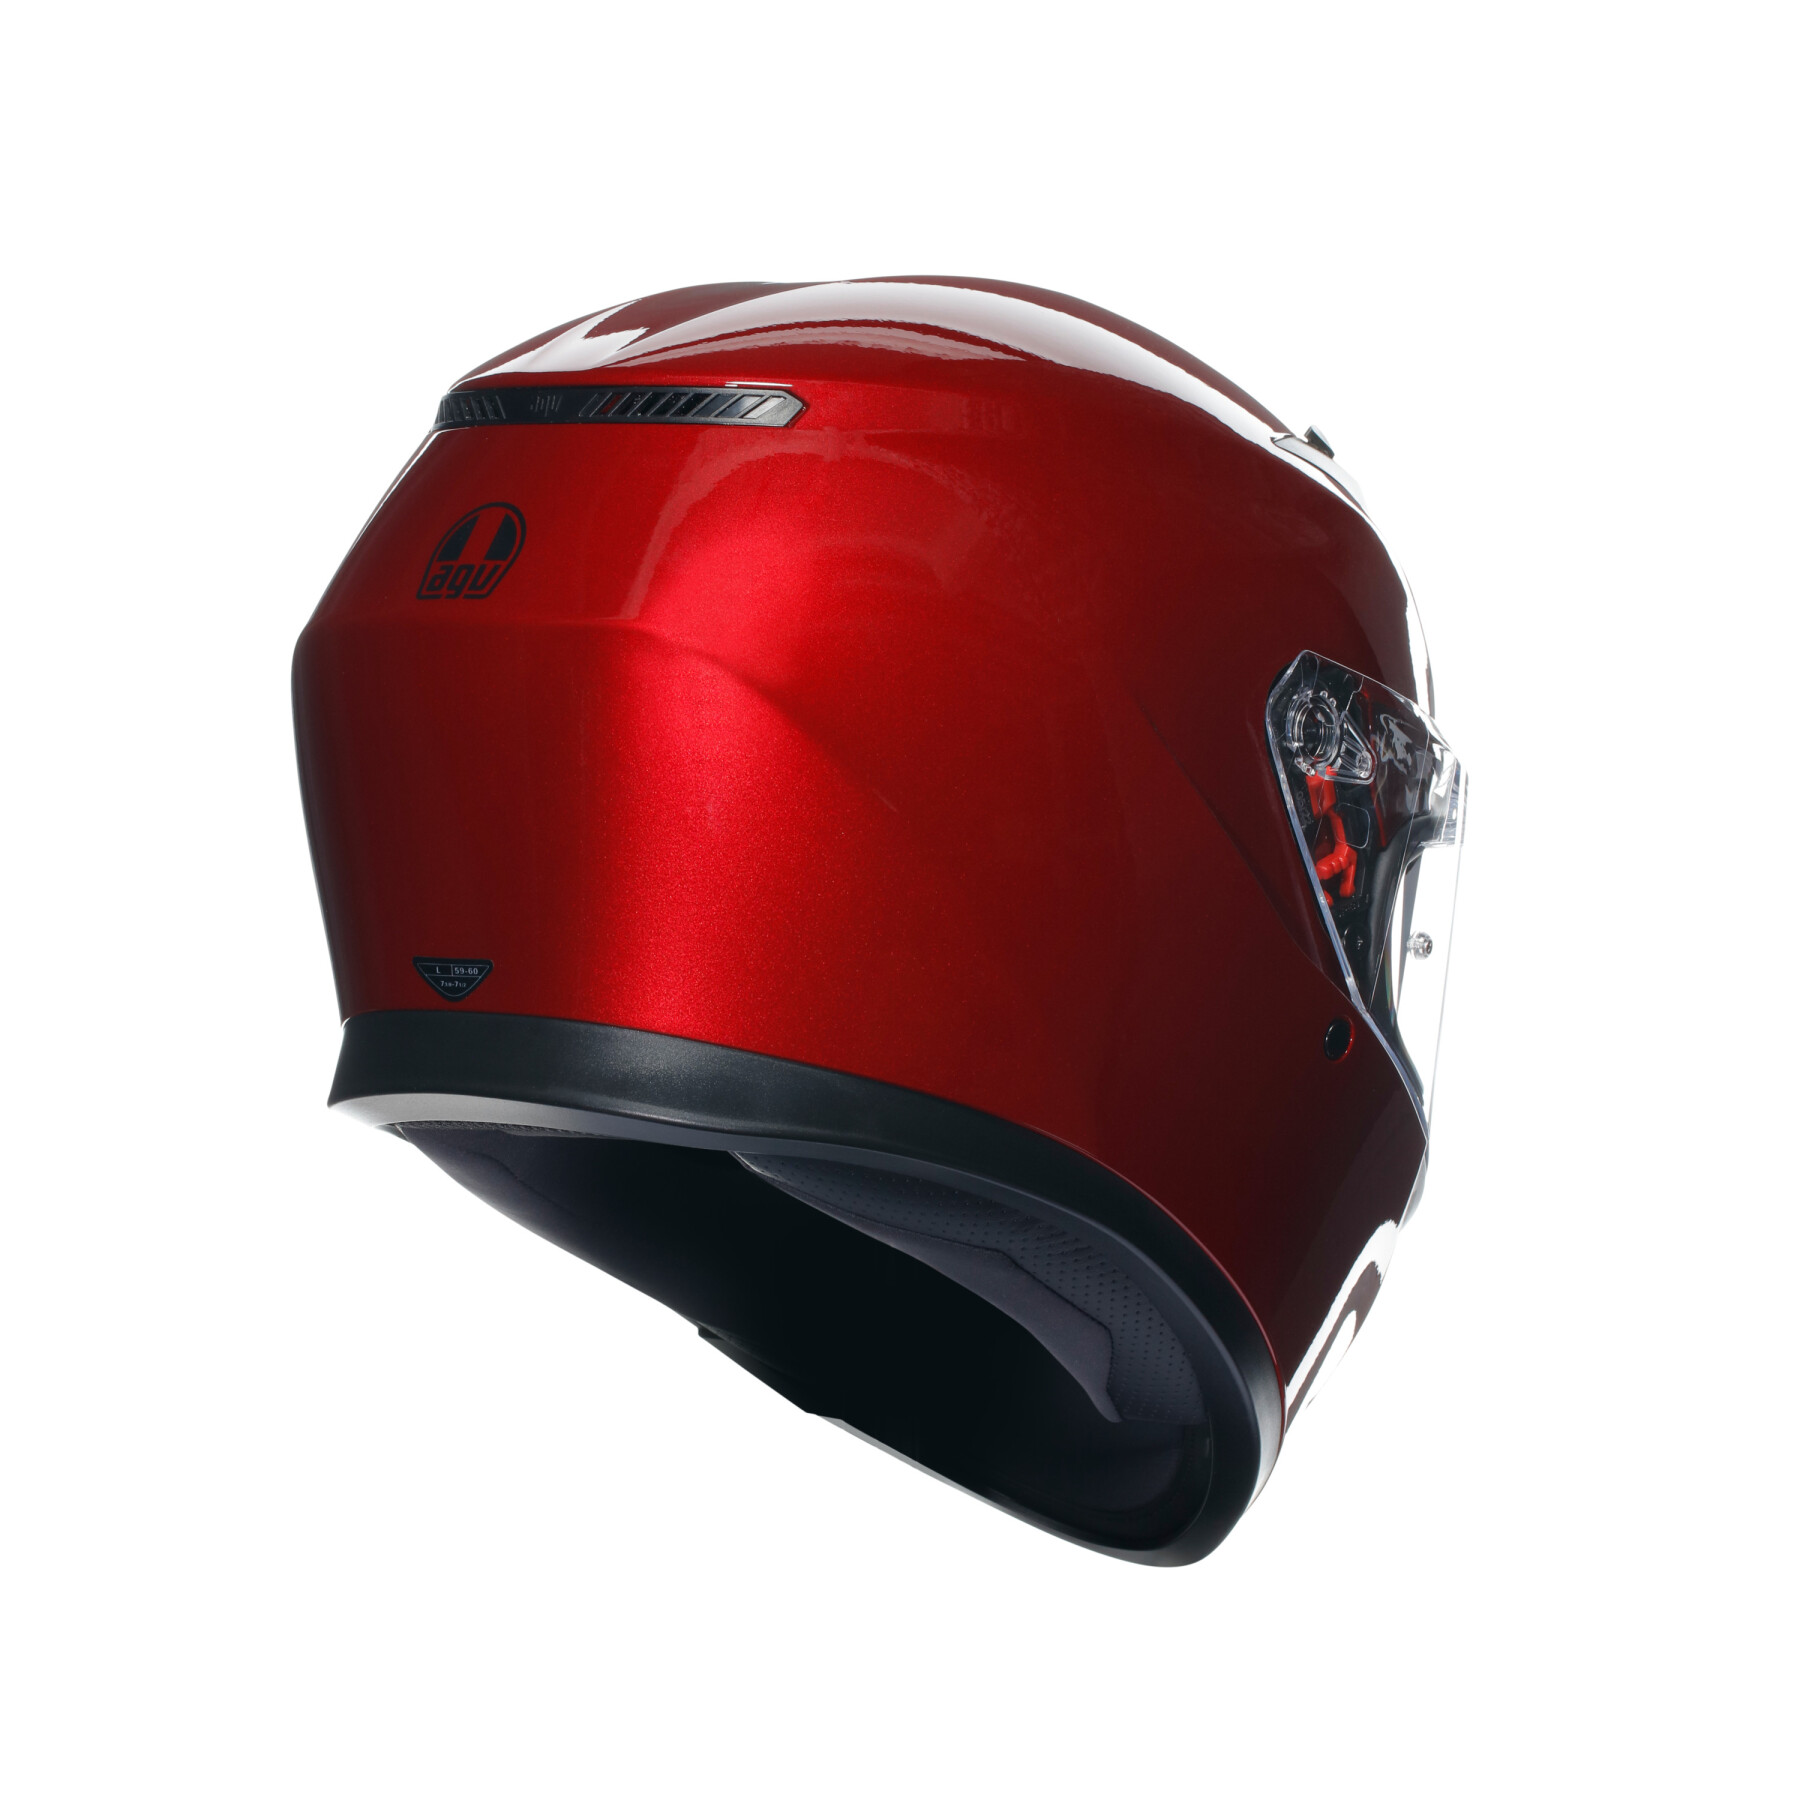 Full face motorcycle helmet AGV K3 Mono Competizione